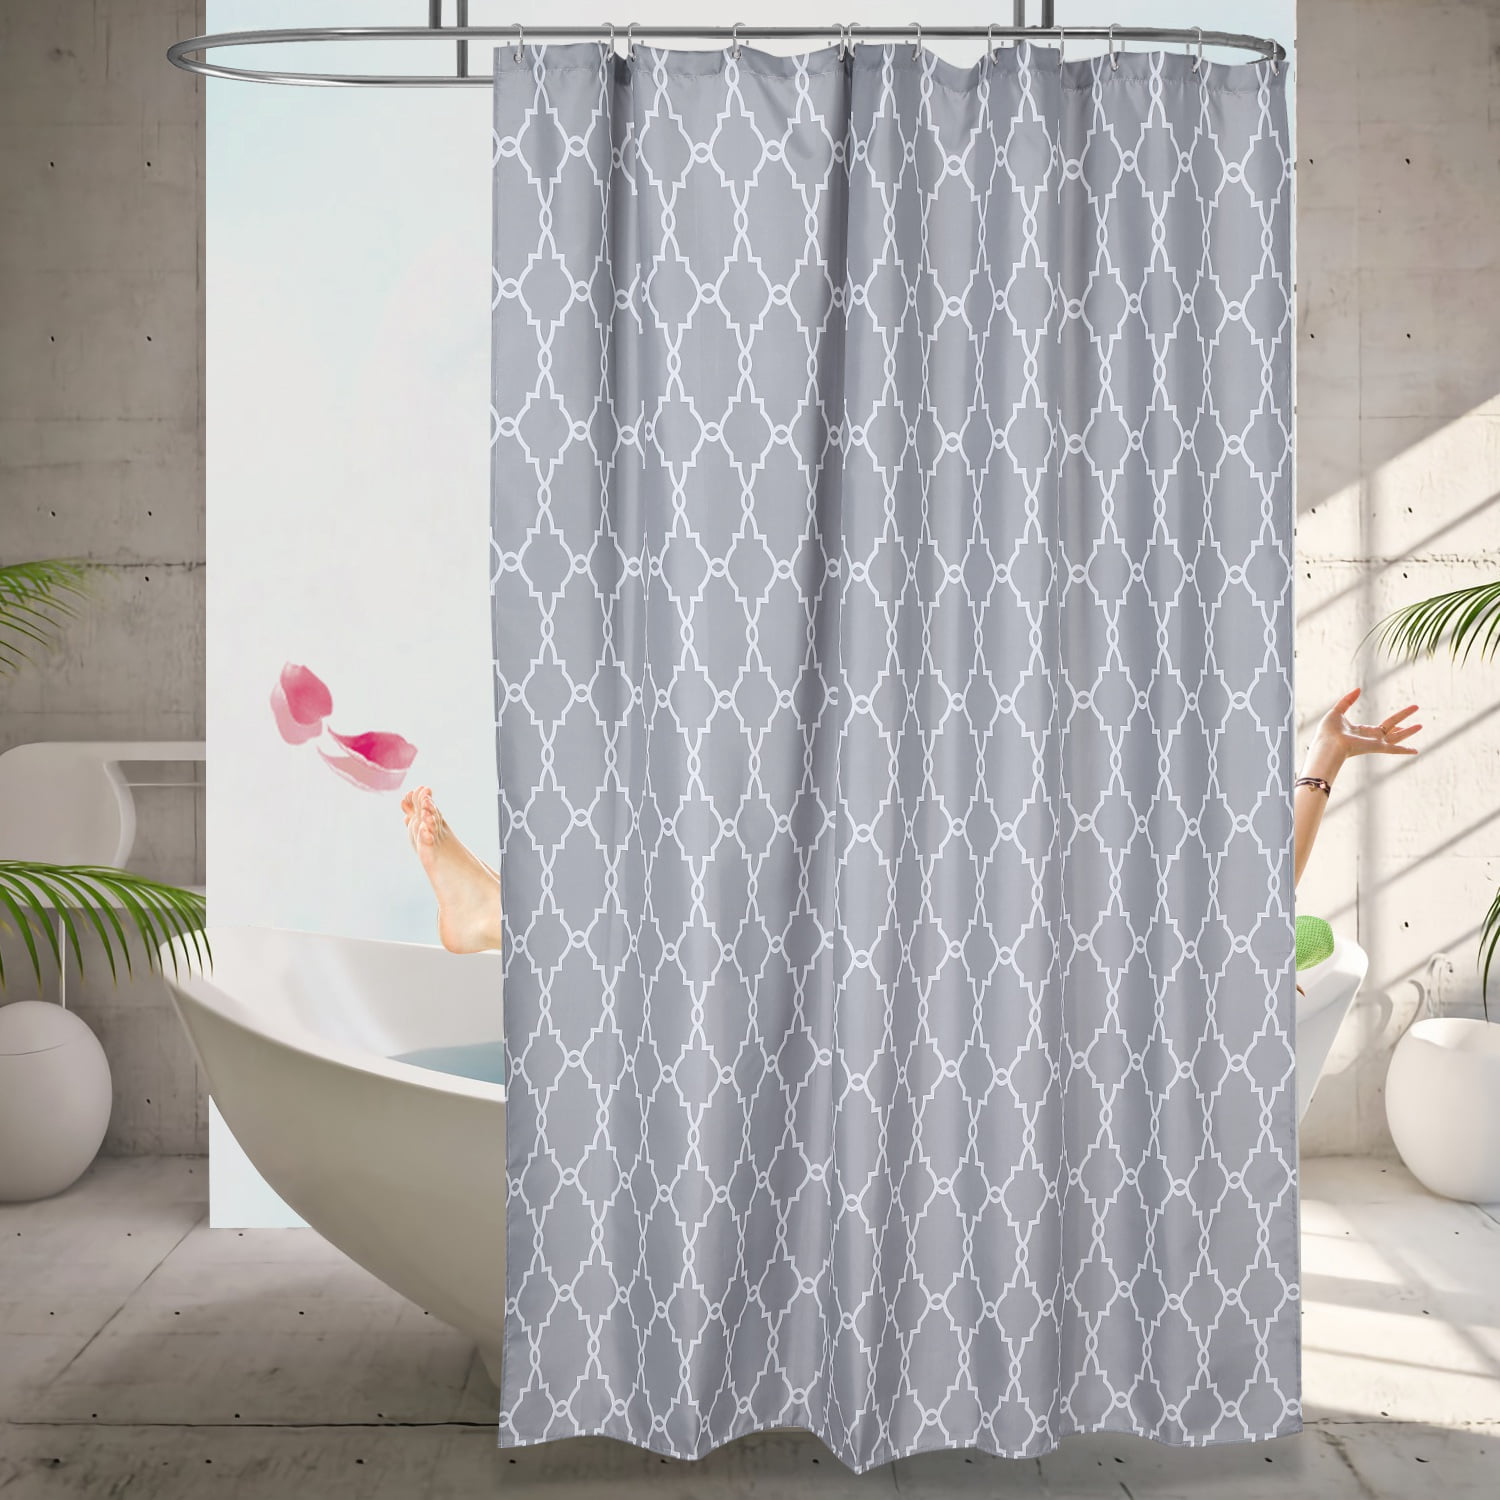 Gray-White Wood Grain Bathroom Decor Waterproof Shower Curtain Liner & 12 Hooks 